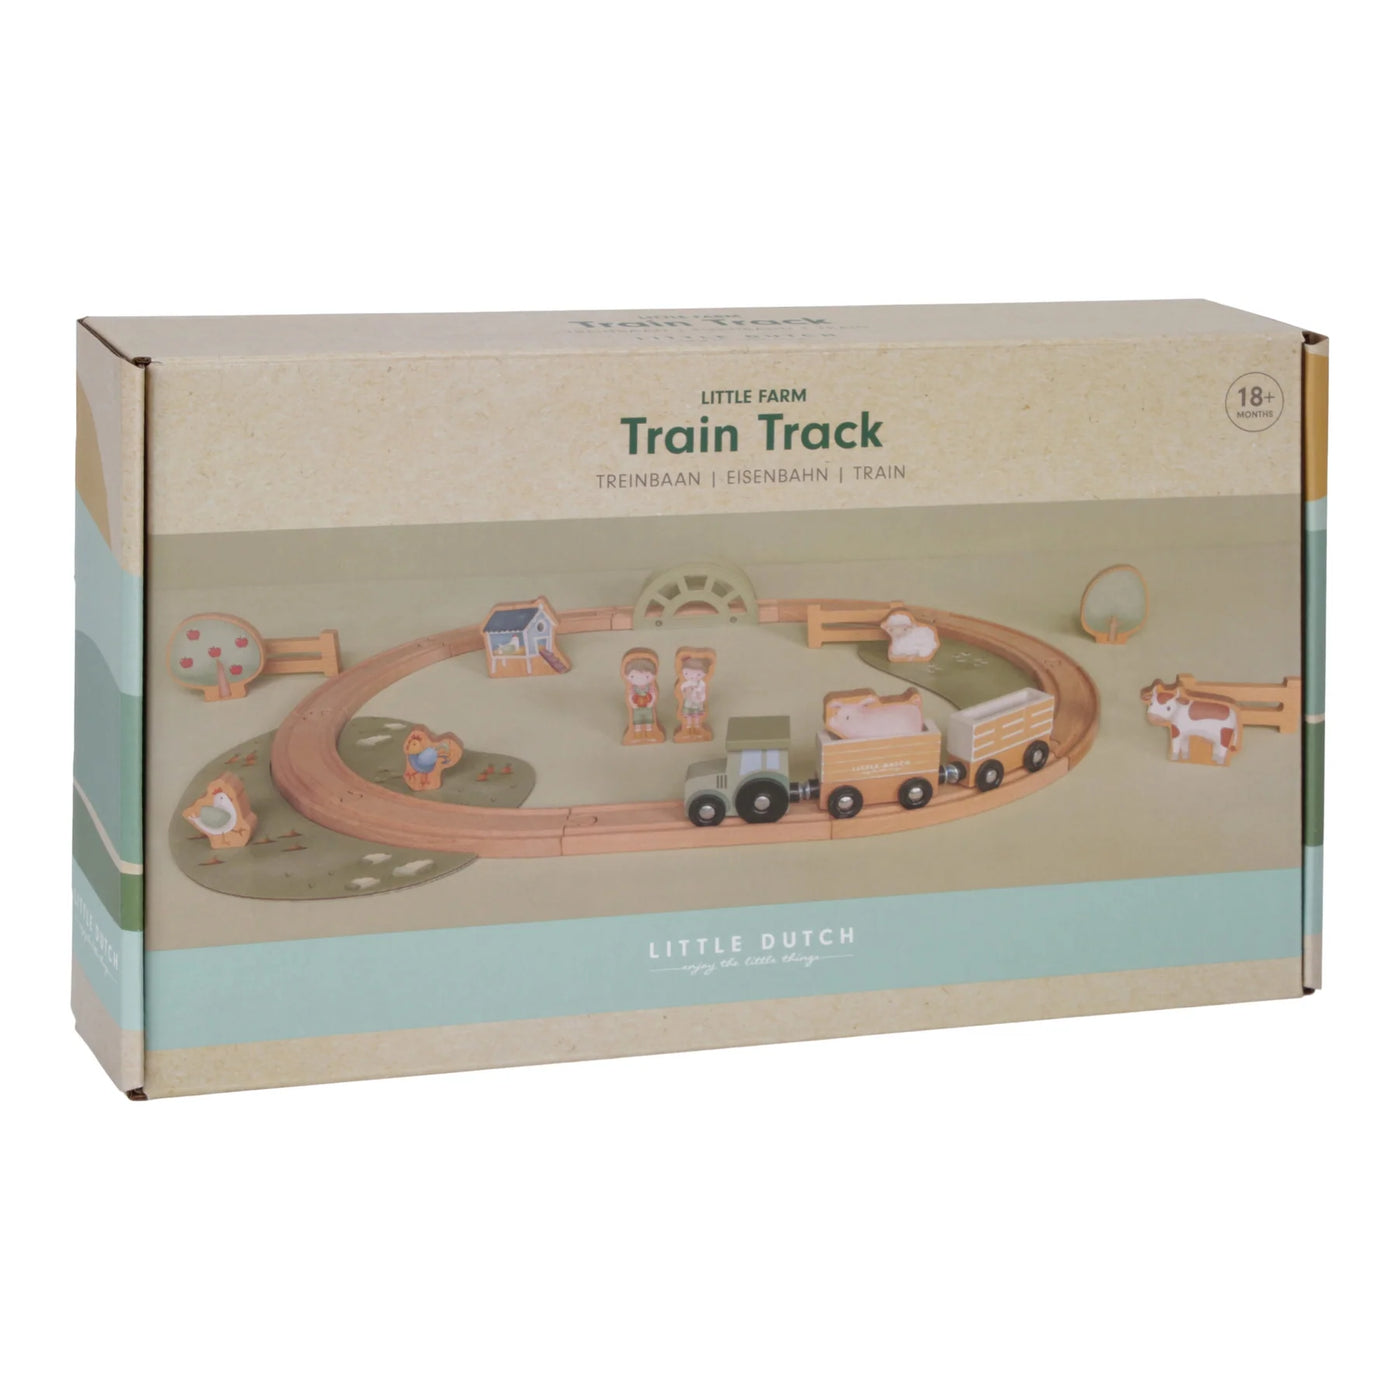 Little Dutch Wooden Train Track | Little Farm